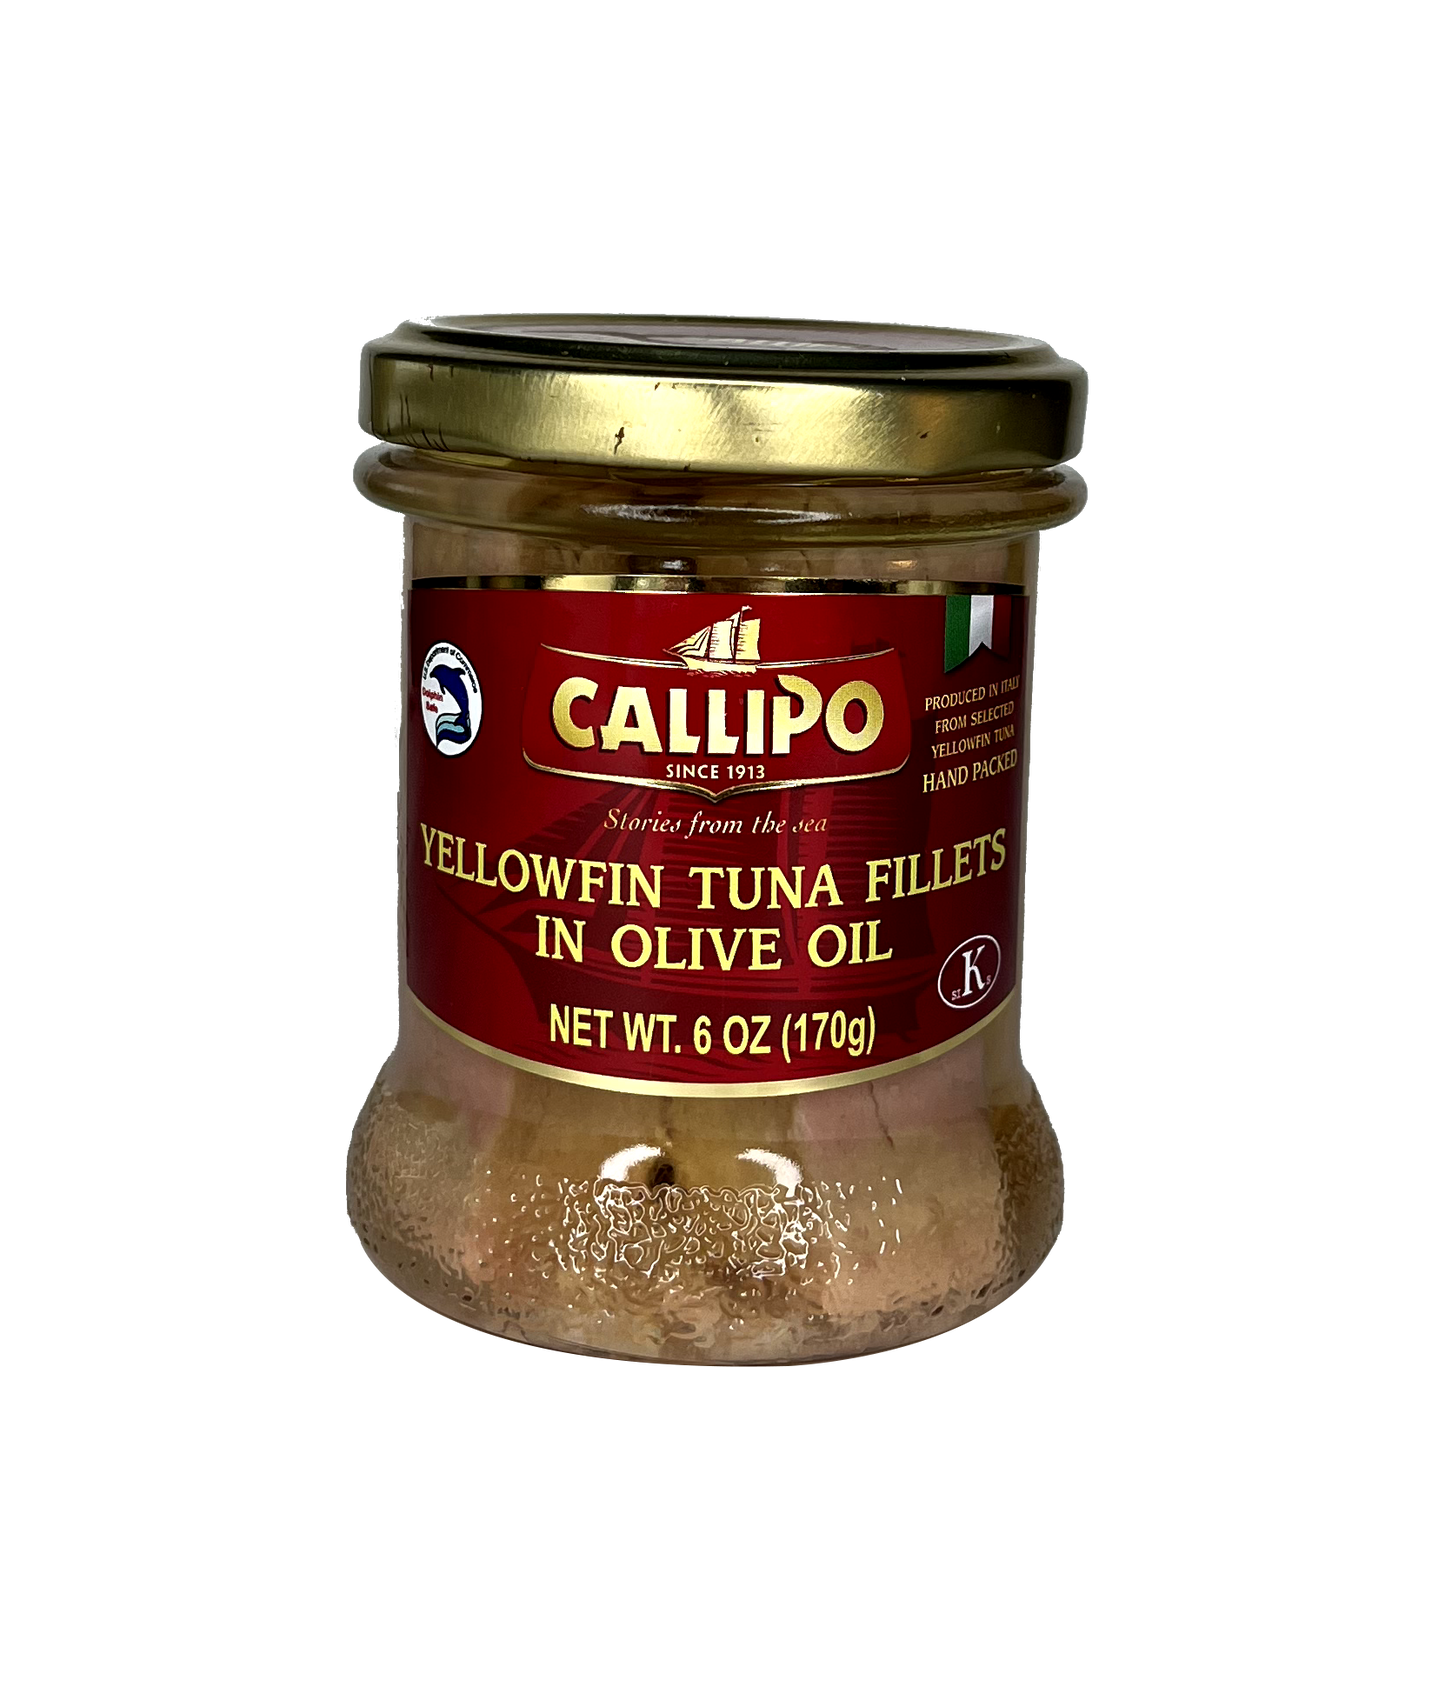 Callipo Yellowfin tuna fillets in olive oil